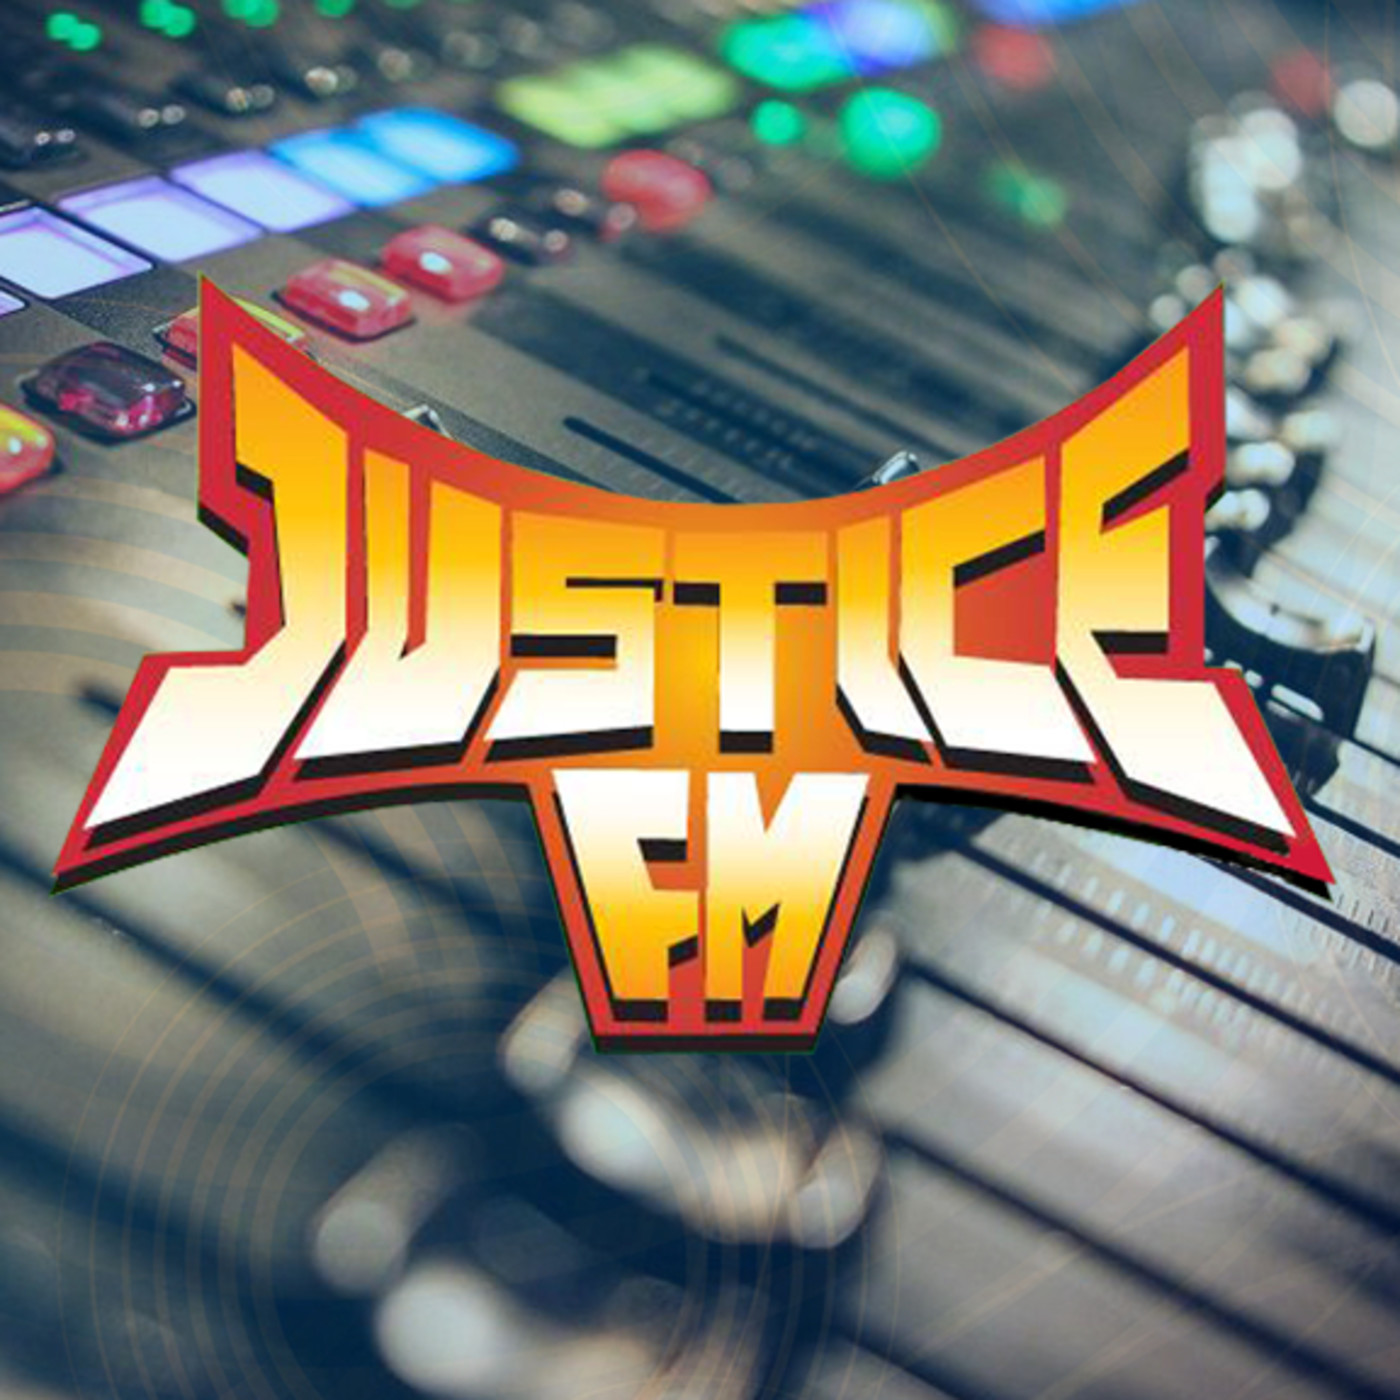 Justice FM - Playlist 54